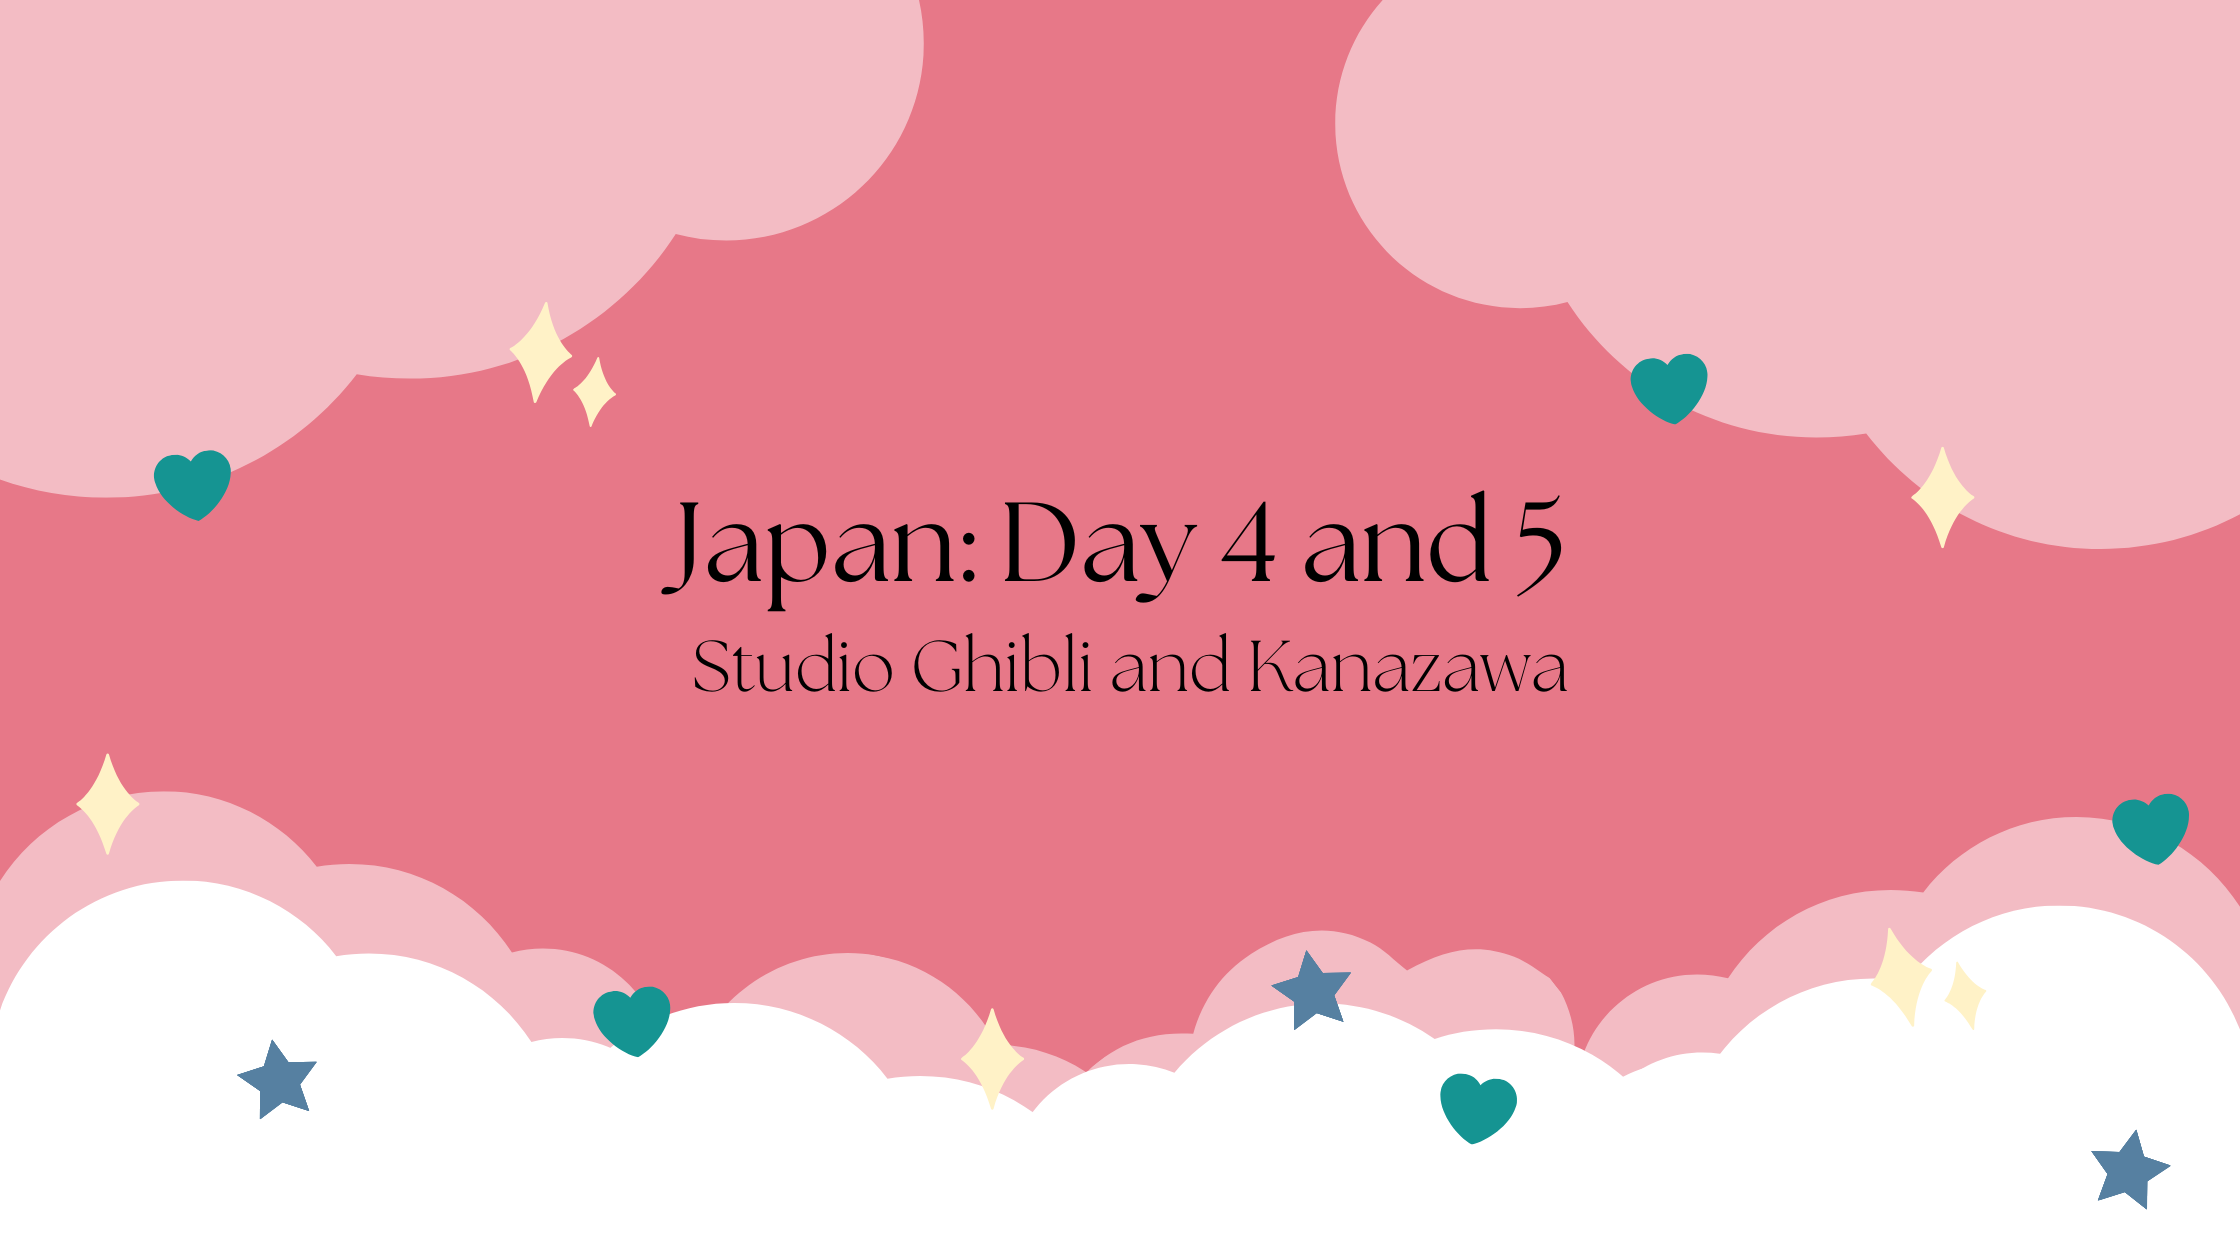 Days 4 and 5 In Japan: Studio Ghibli and Kanazawa